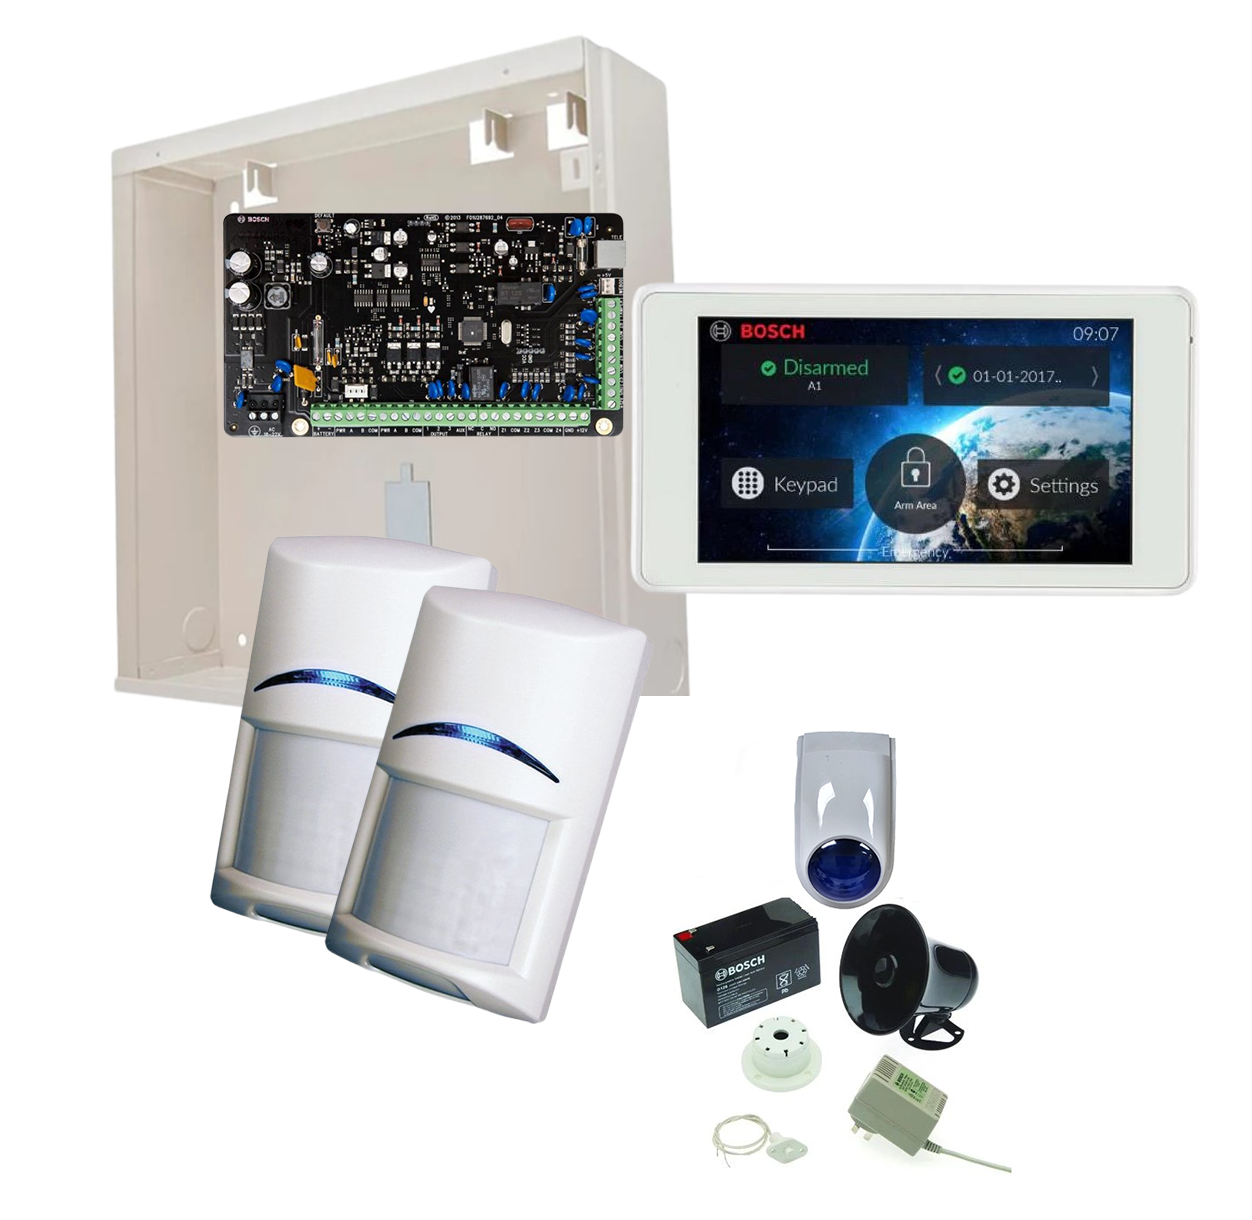 BOSCH, Solution 2000, Alarm kit, With ICP-SOL2-P panel, 5" Touchscreen keypad, 2x PIR detectors